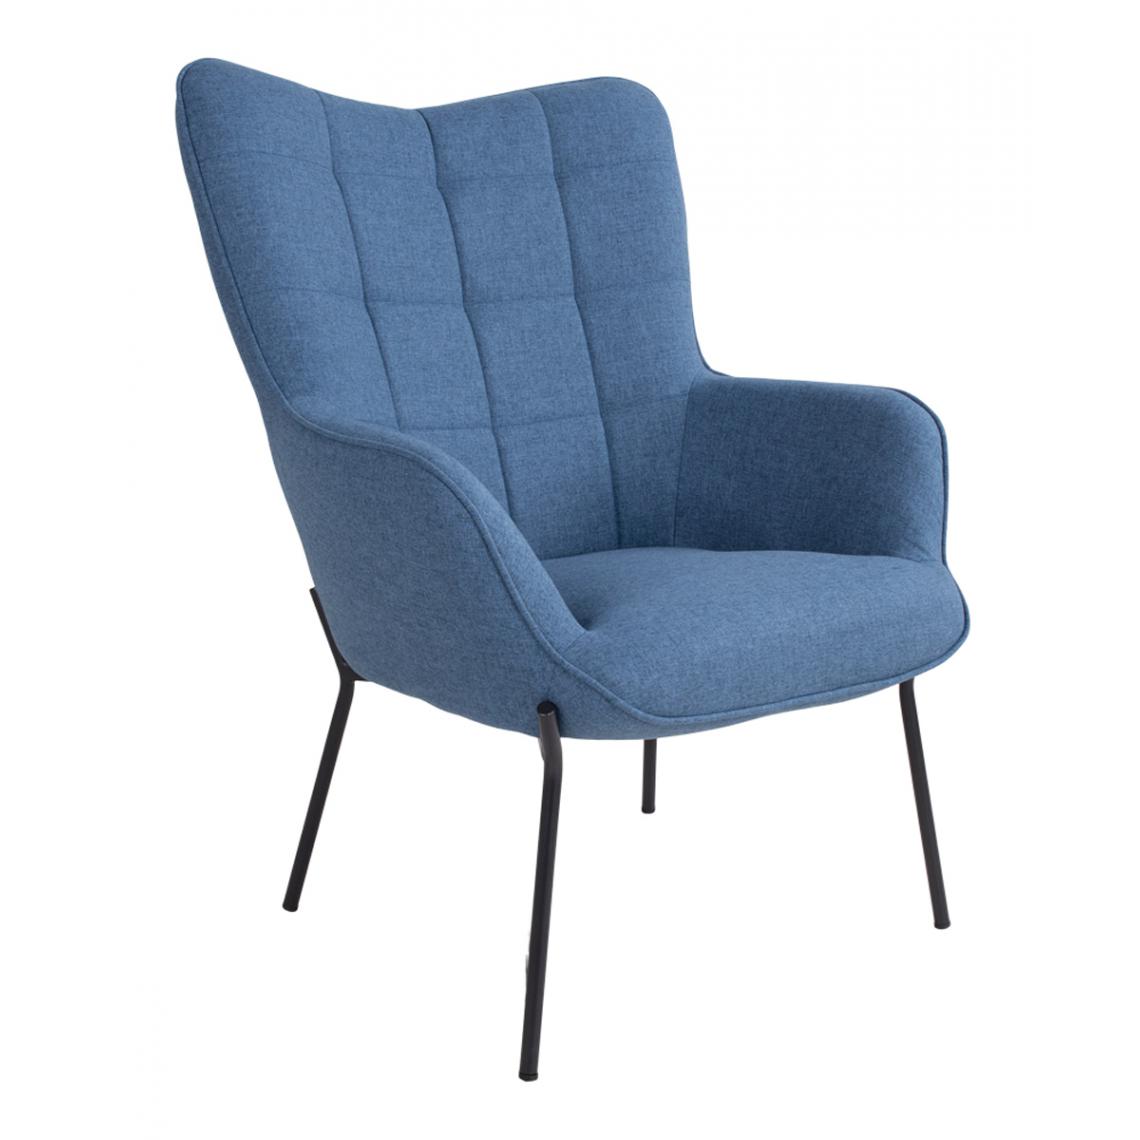 Pegane - Chaise coloris bleu en polyester - 79 x 70 x 98 cm - Chaises